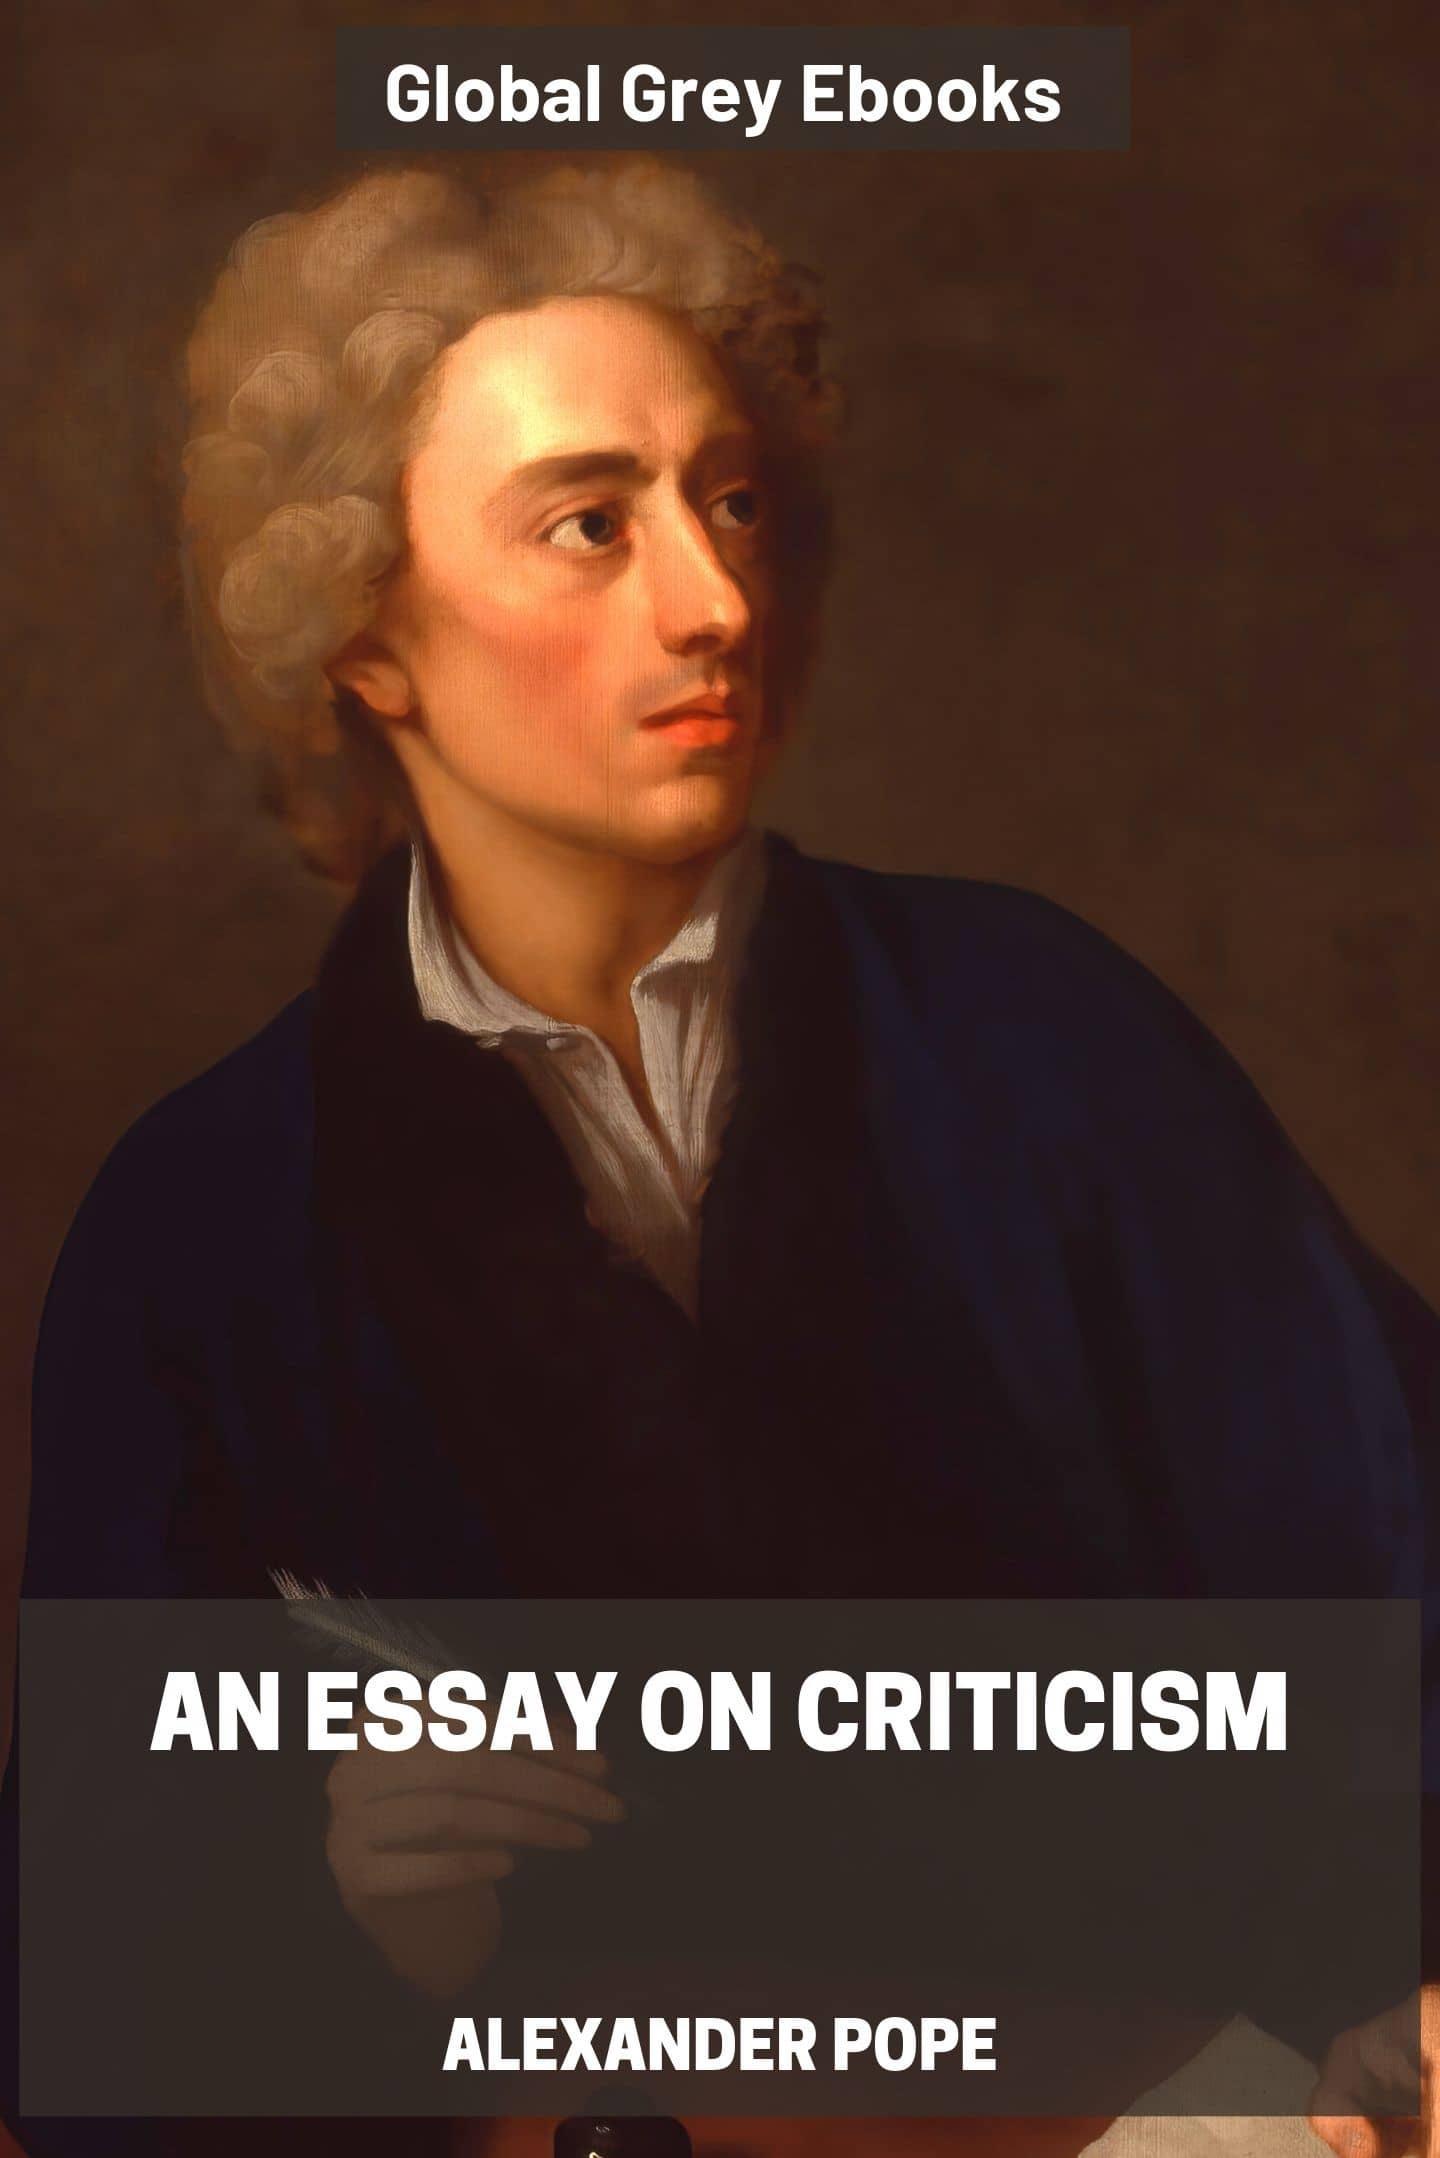 who wrote essay in criticism